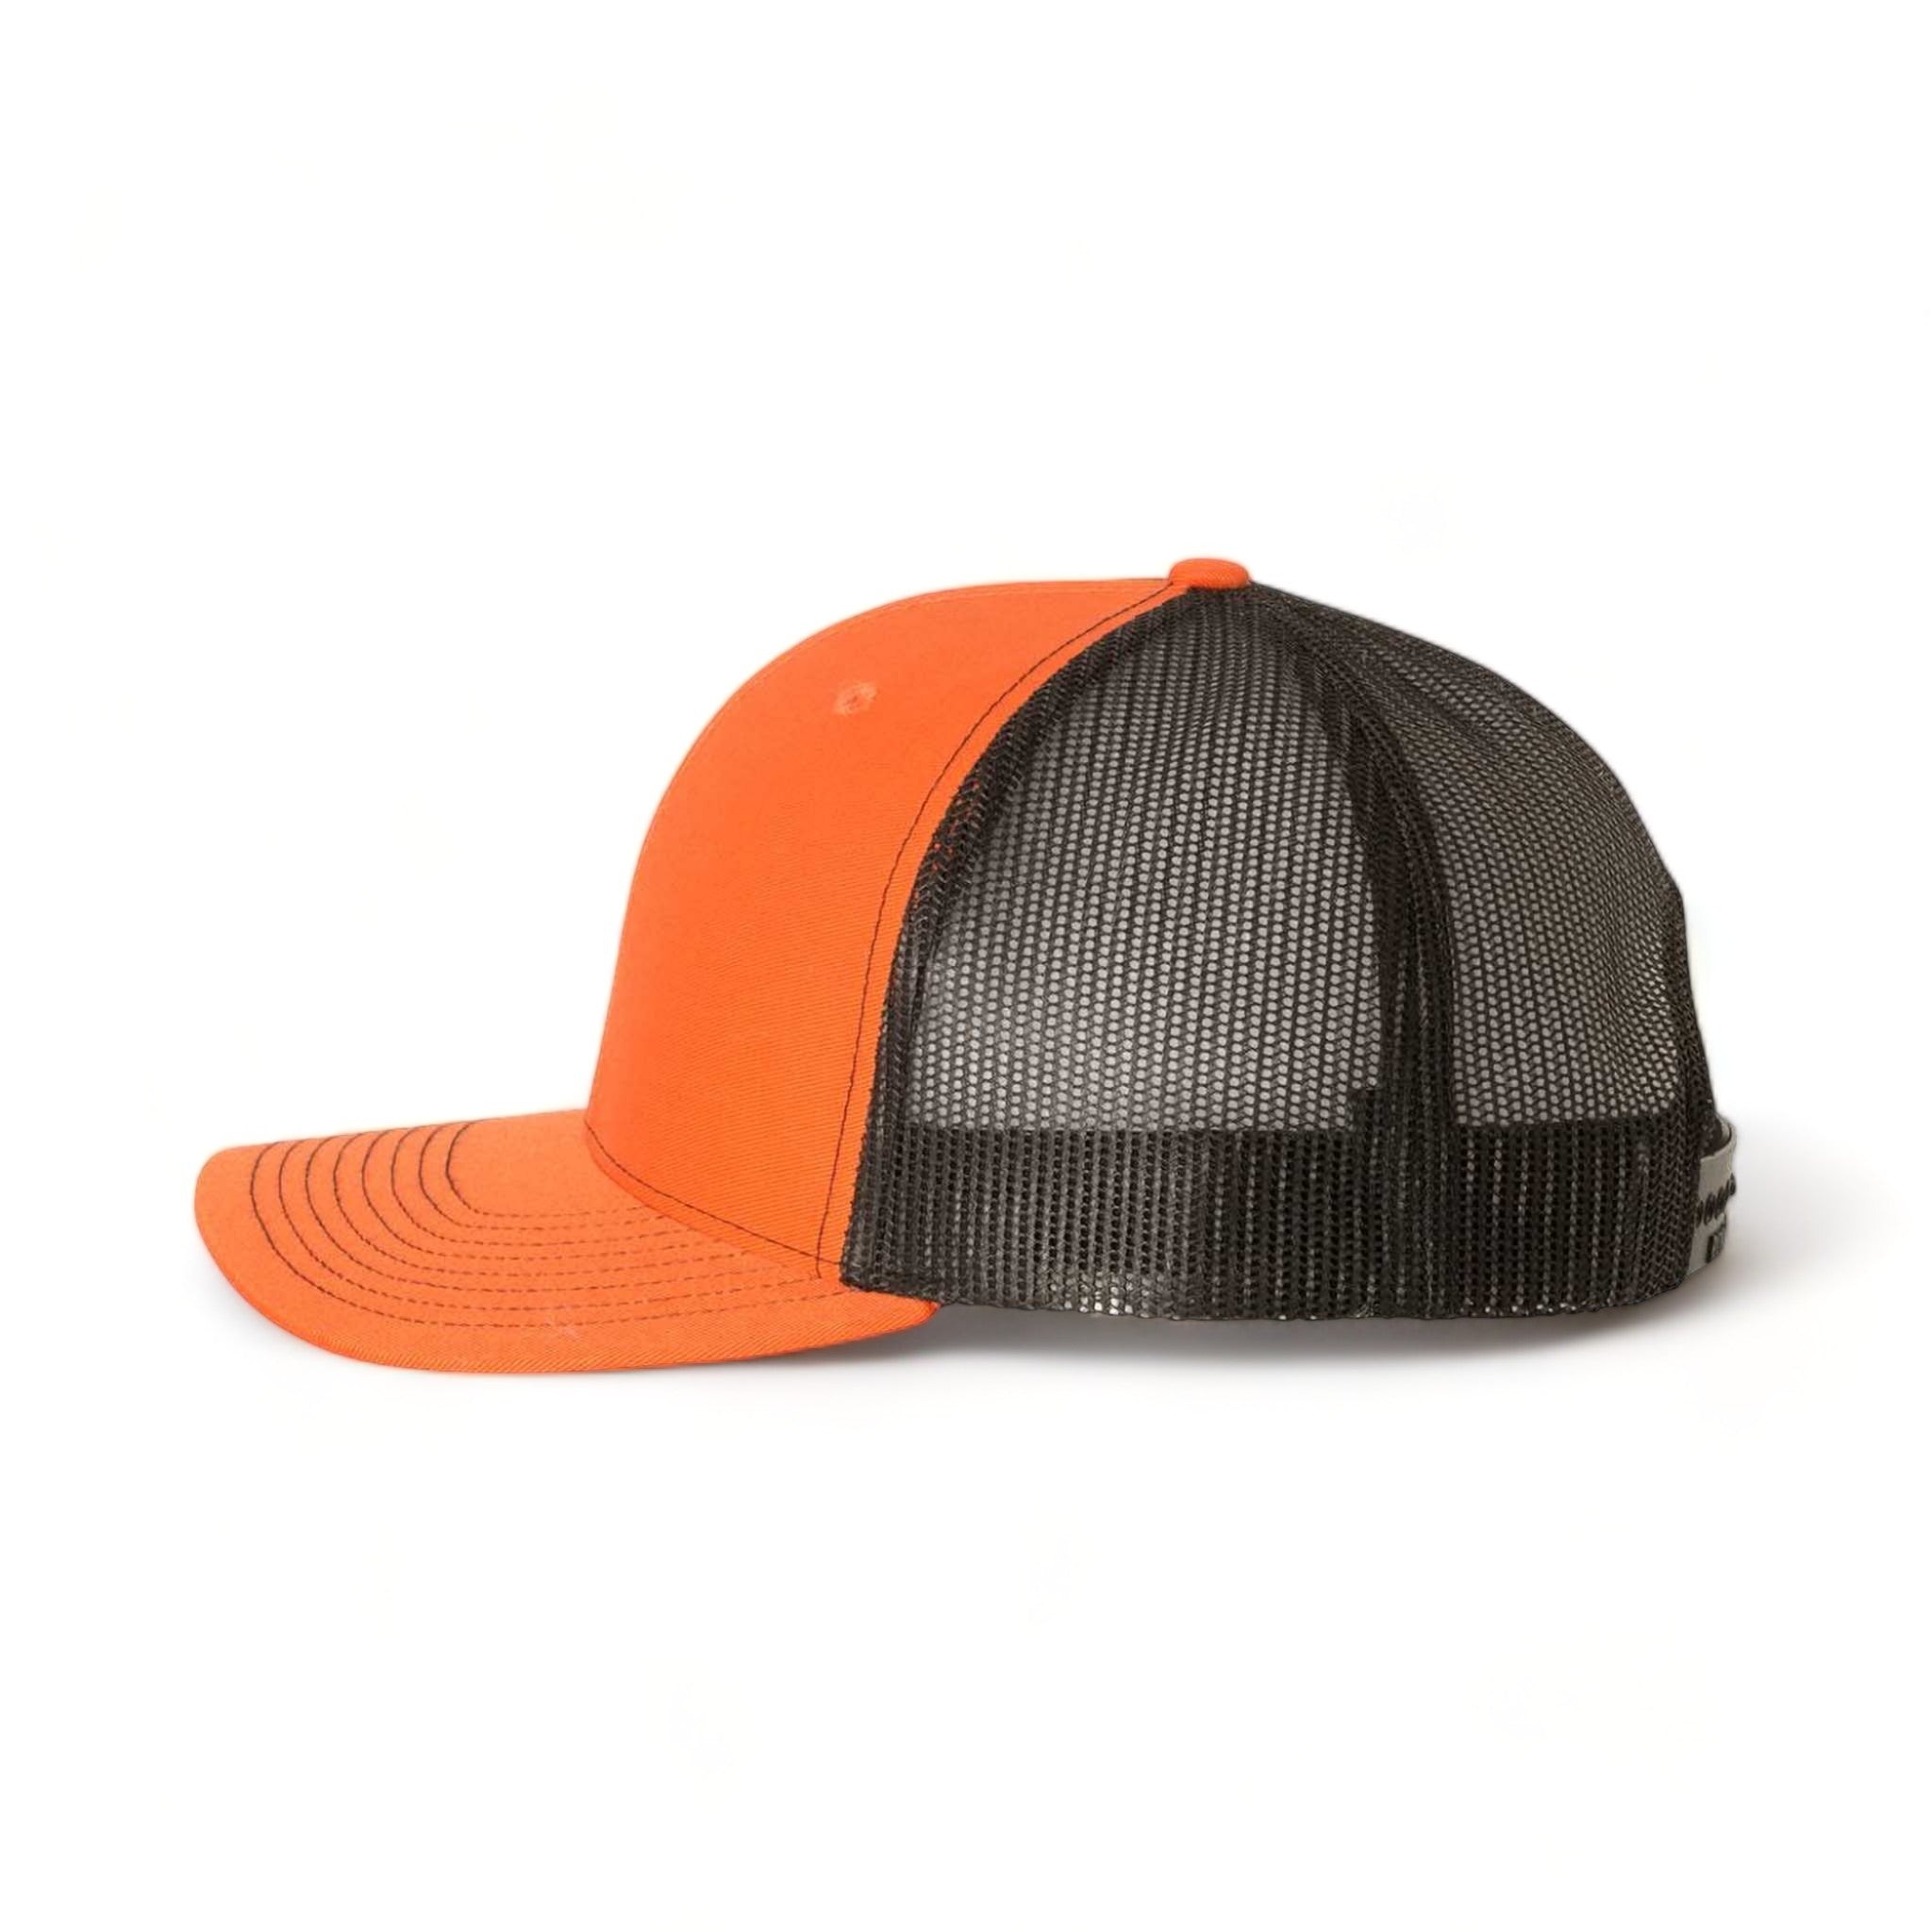 Side view of Richardson 112 custom hat in orange and black